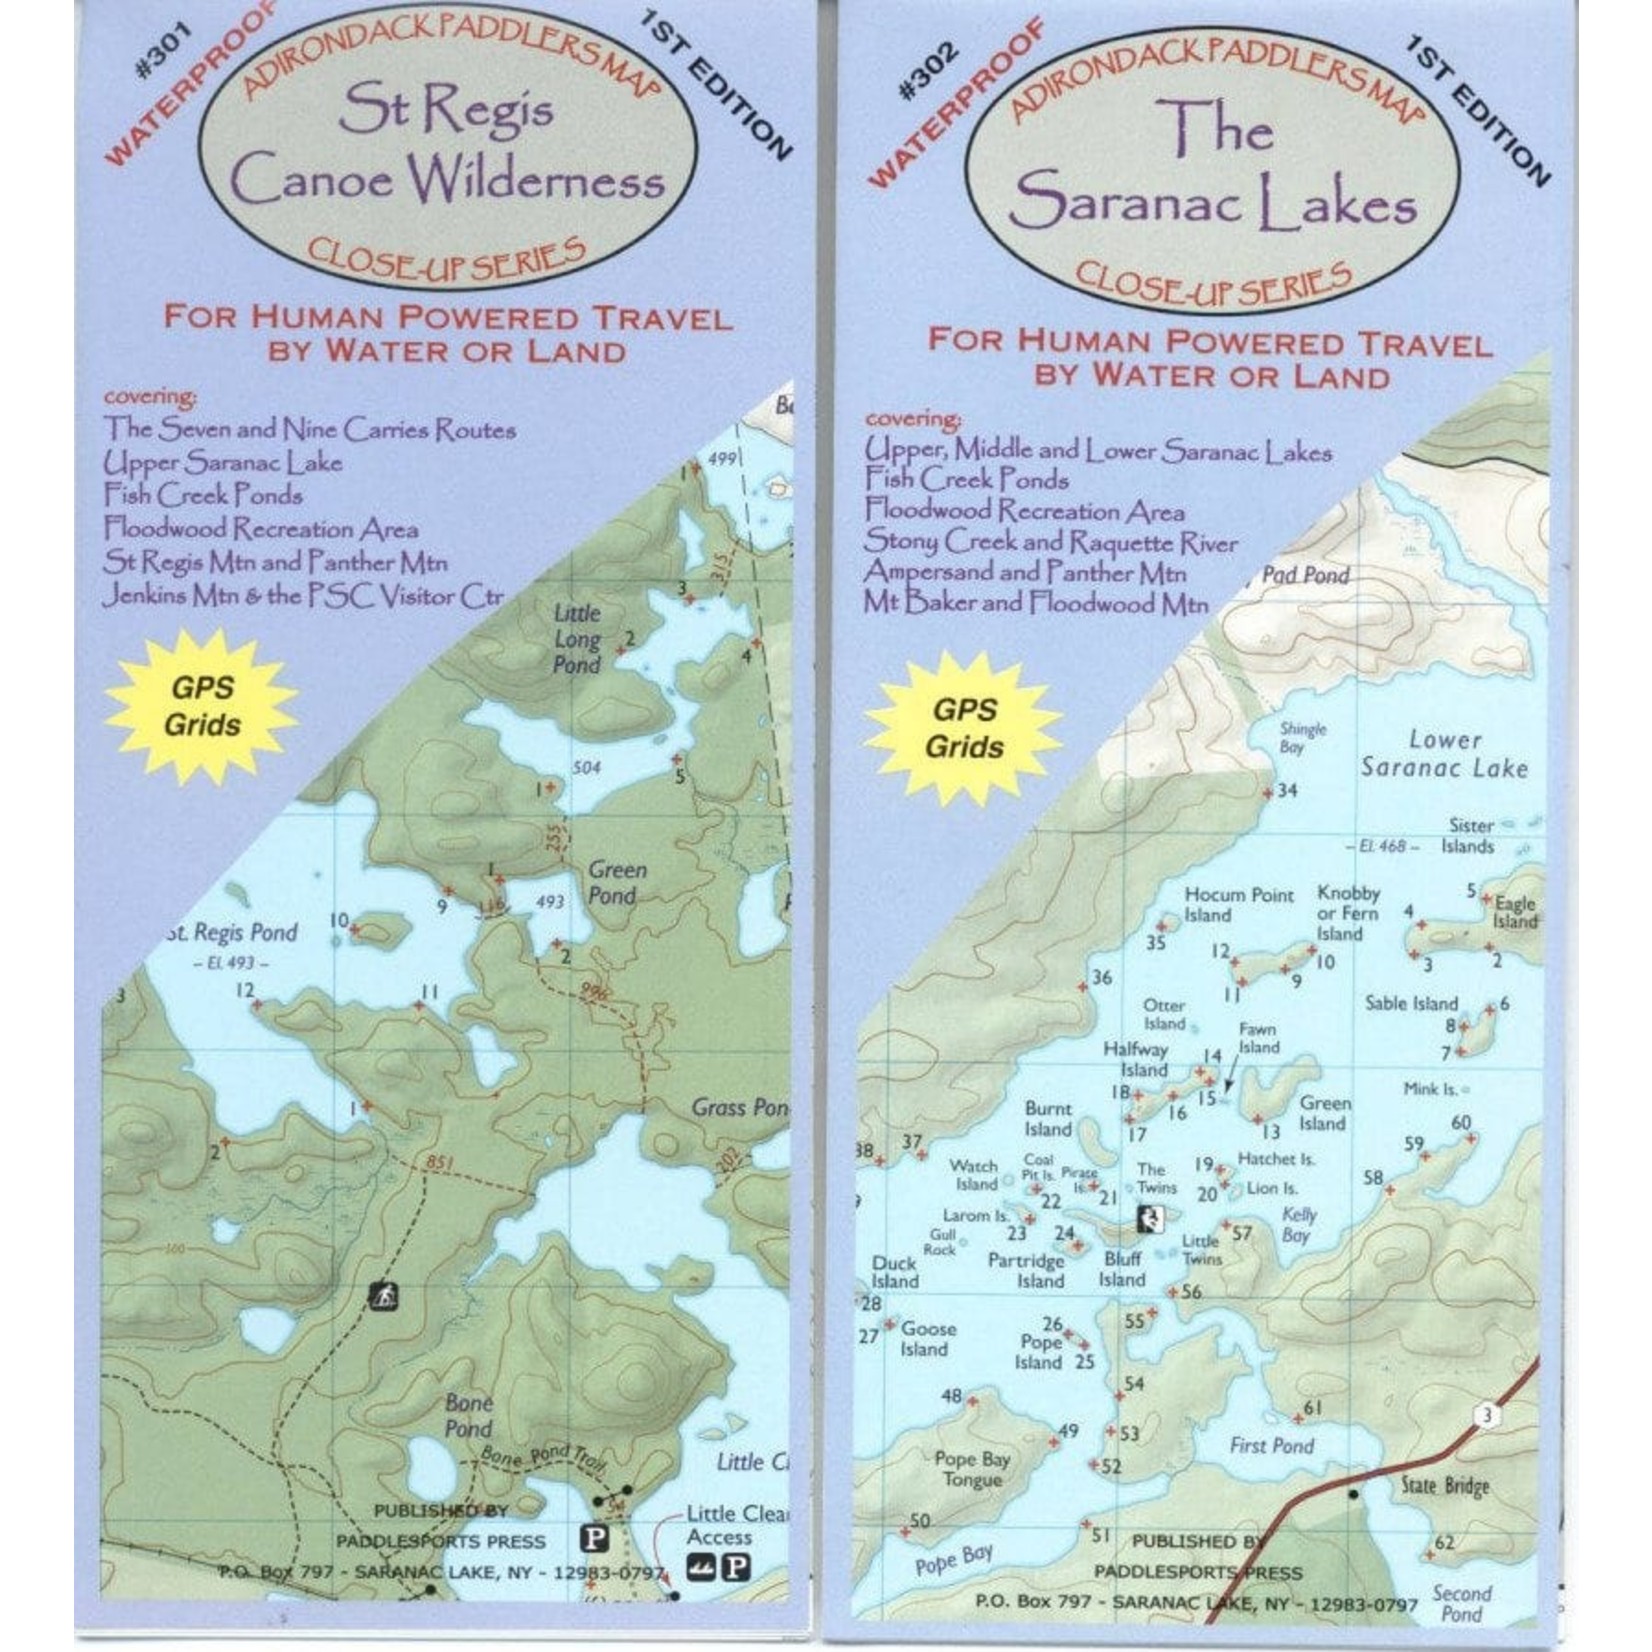 ADK PADDLERS MAP - Saranck Lake Paddlers Map 1:31,250